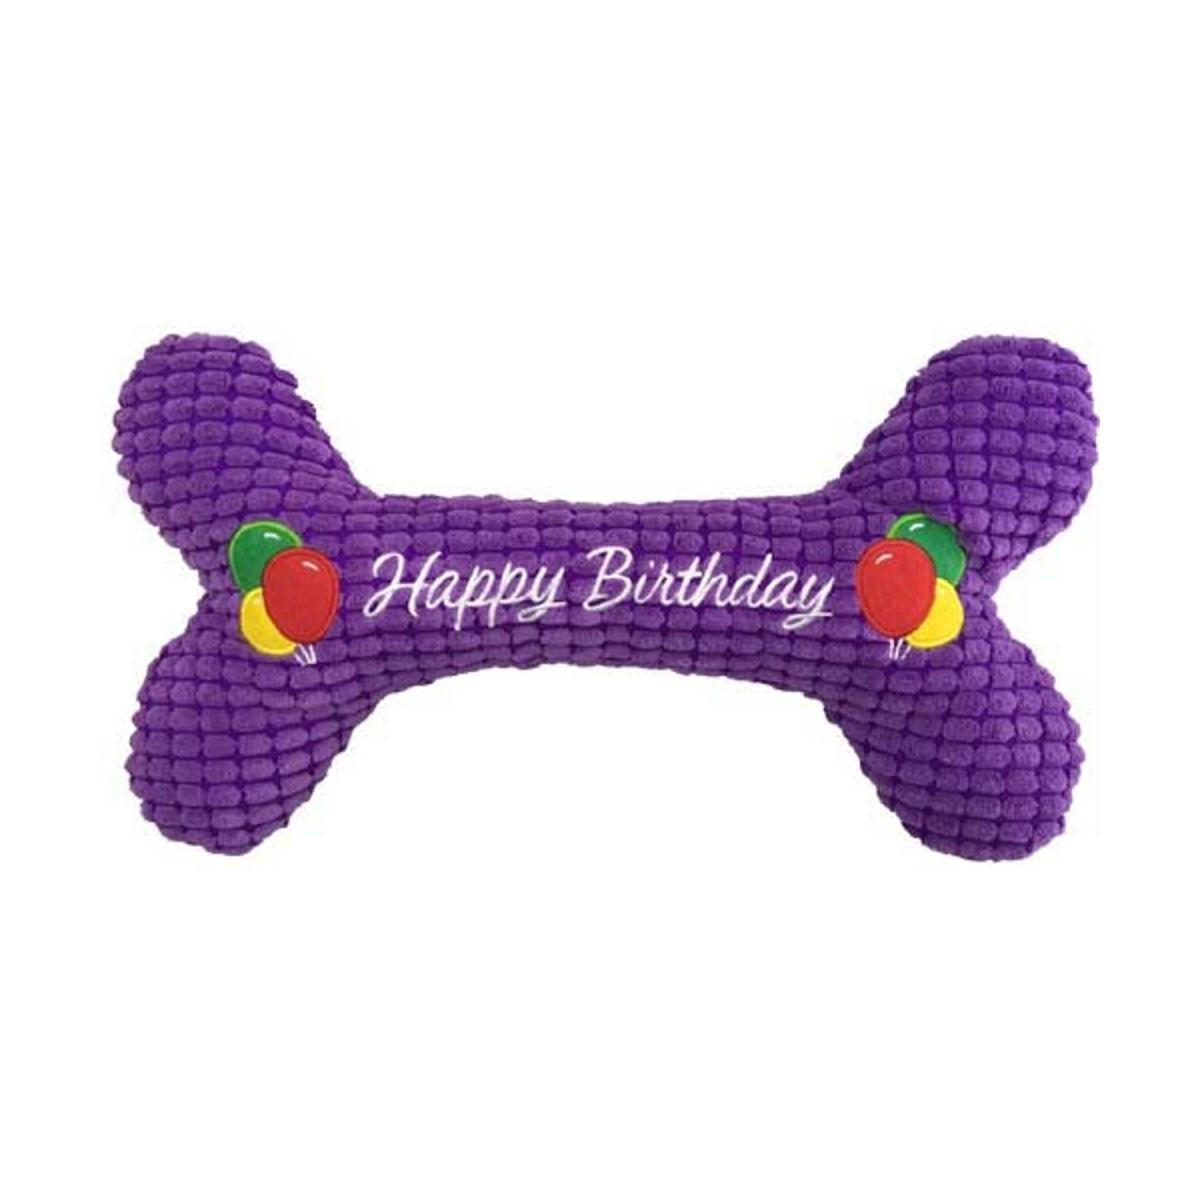 PetLou Happy Birthday Bone Plush Dog Toy - Purple